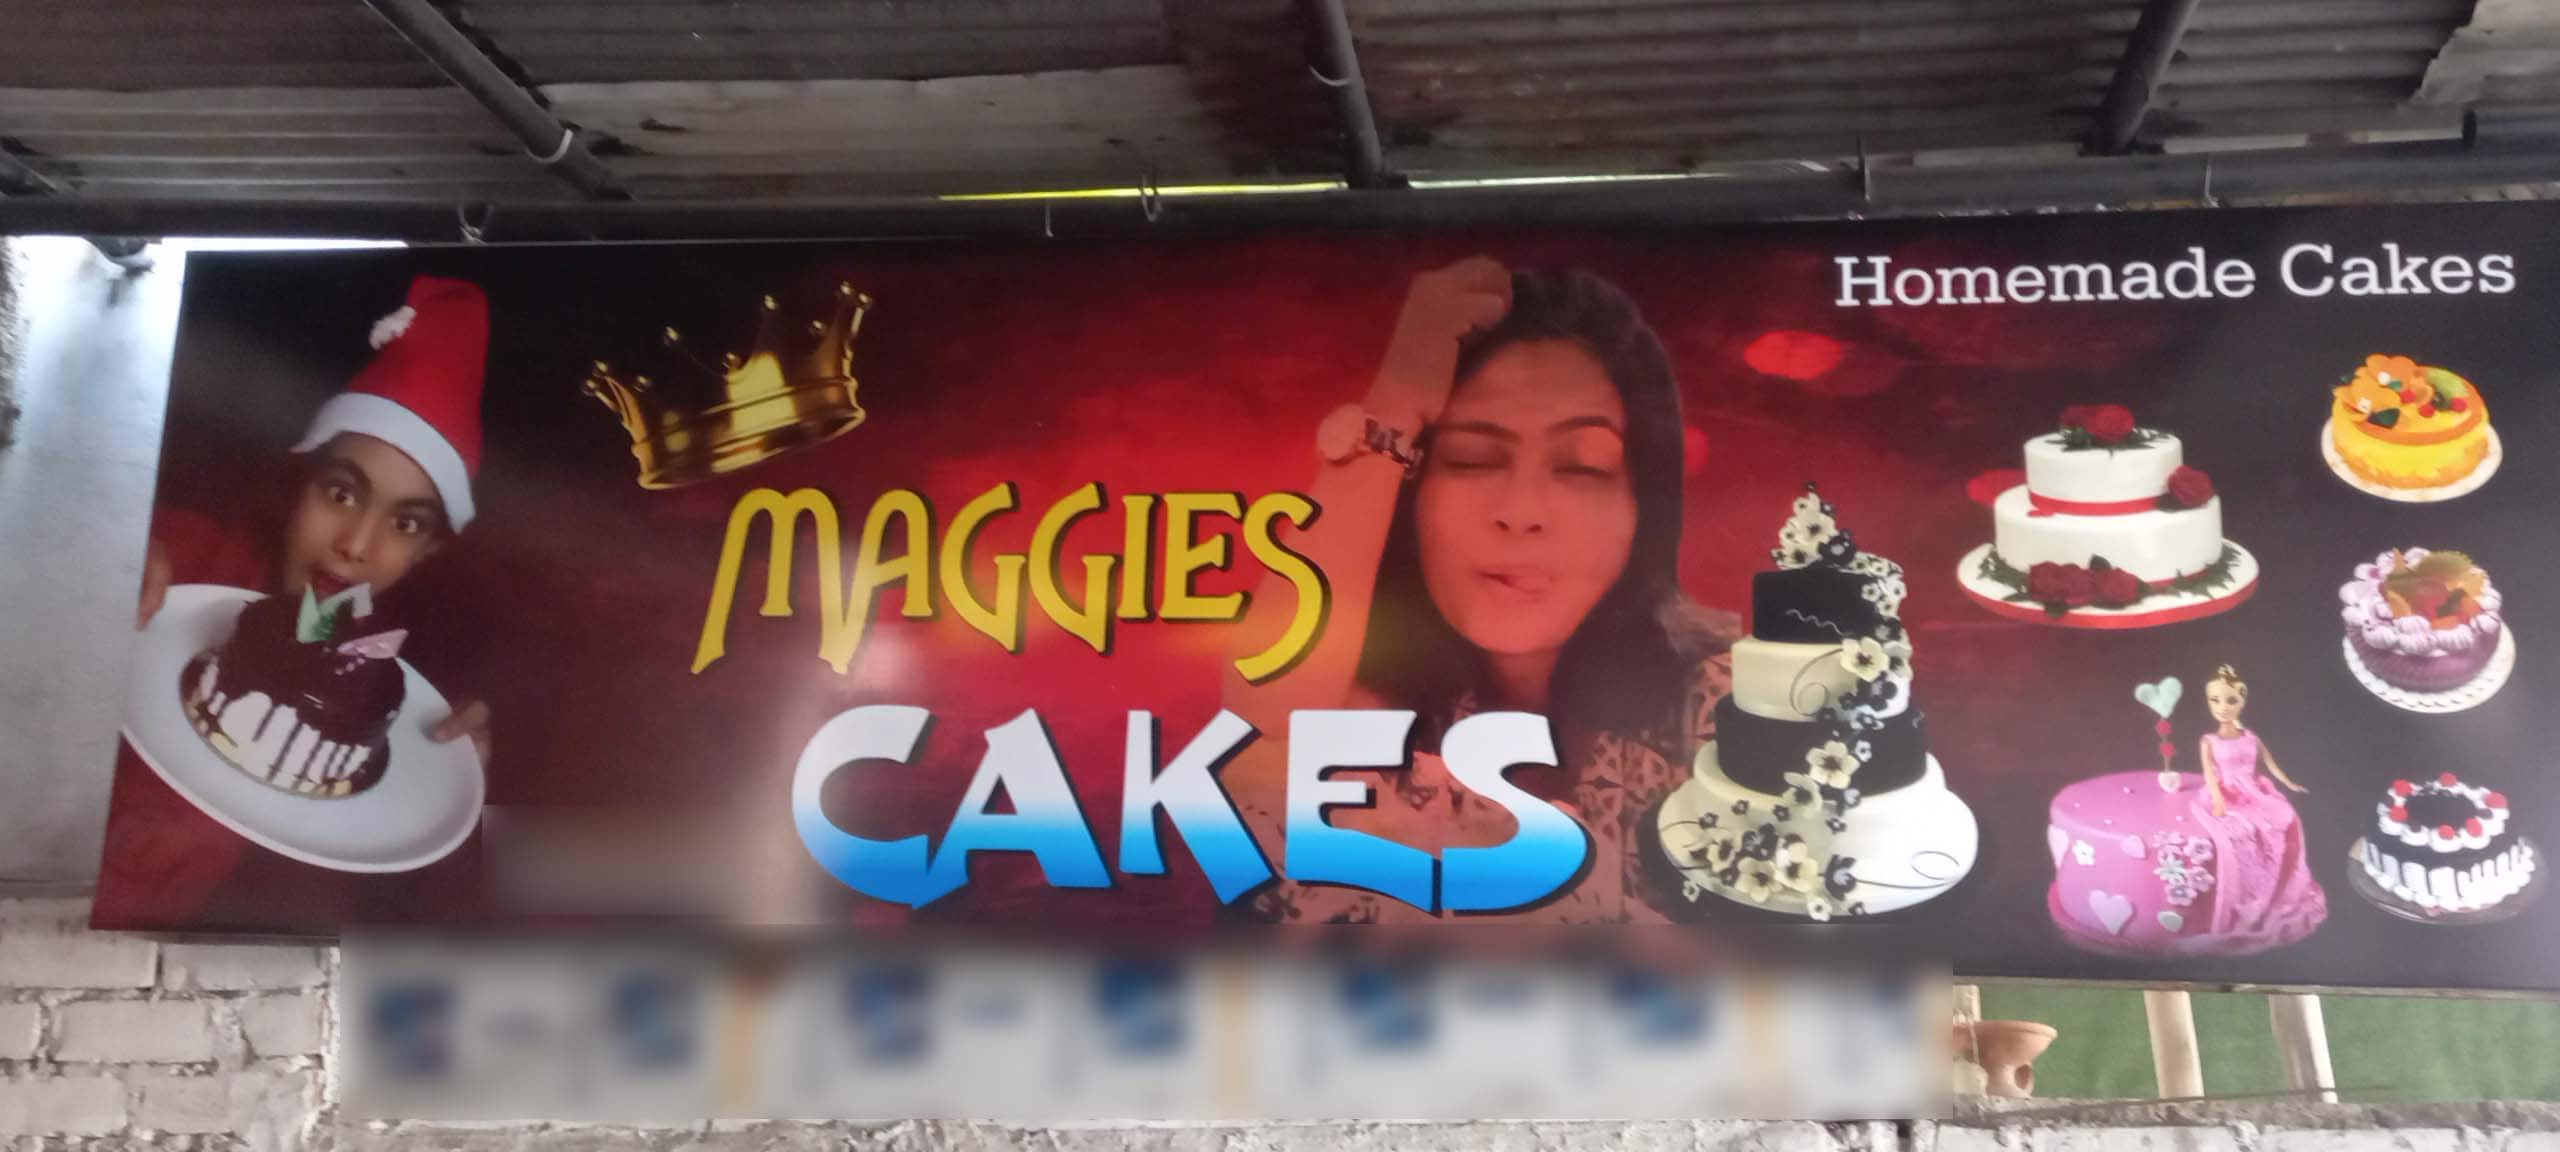 Maggie's Cakes - Wedding Cake - Santa Fe, NM - WeddingWire